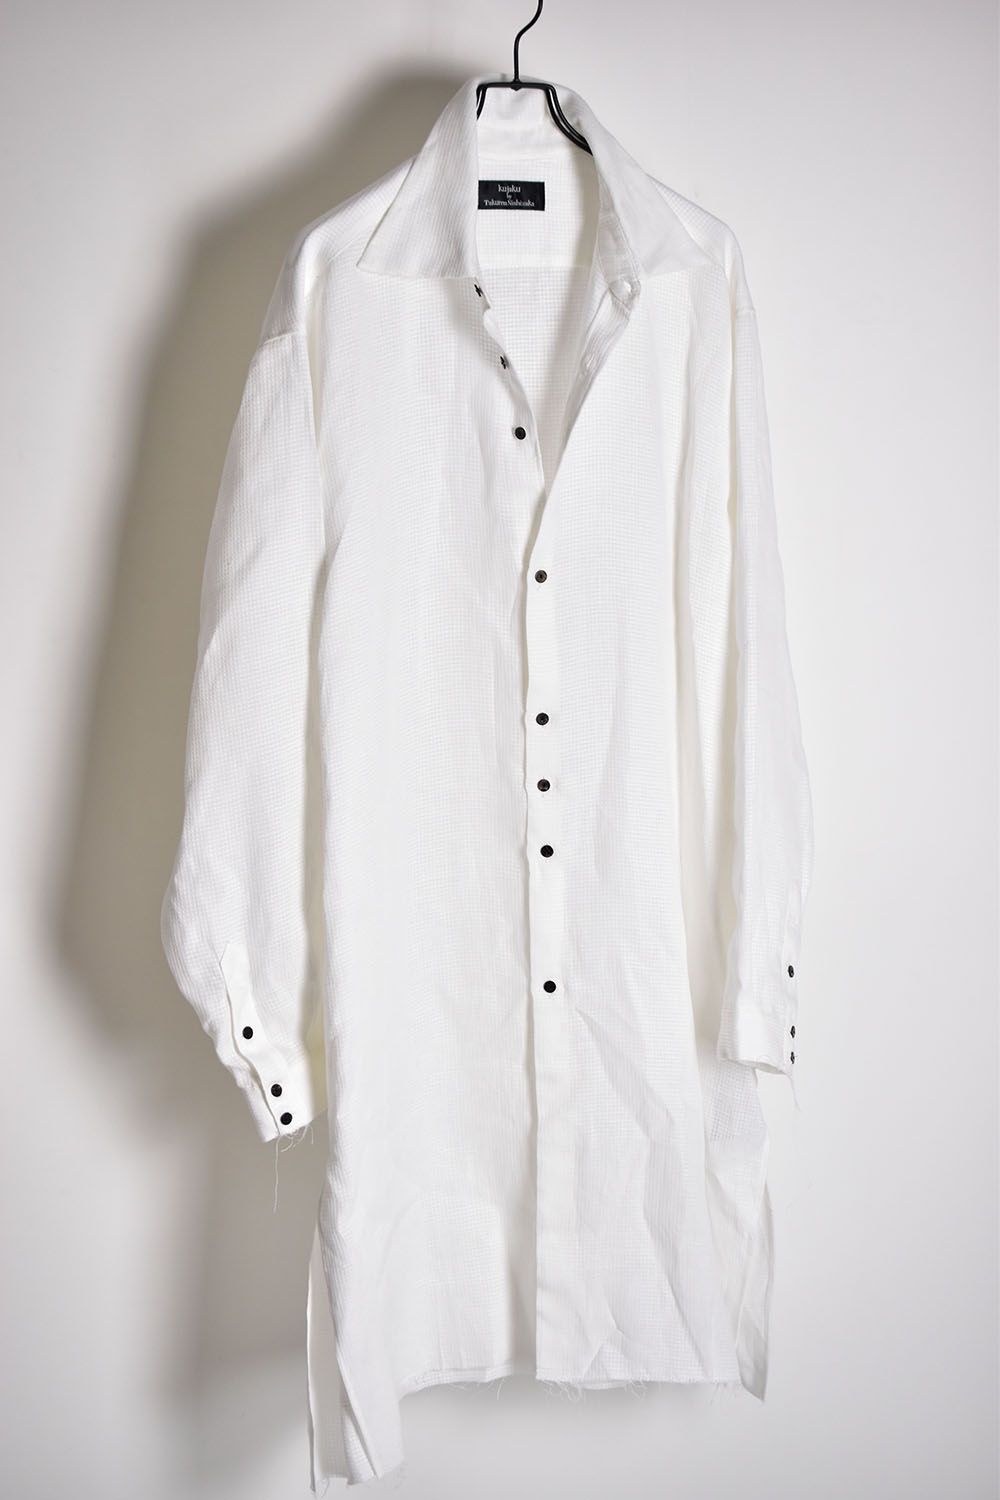 Azami Shirts"White"/アザミシャツ"ホワイト"